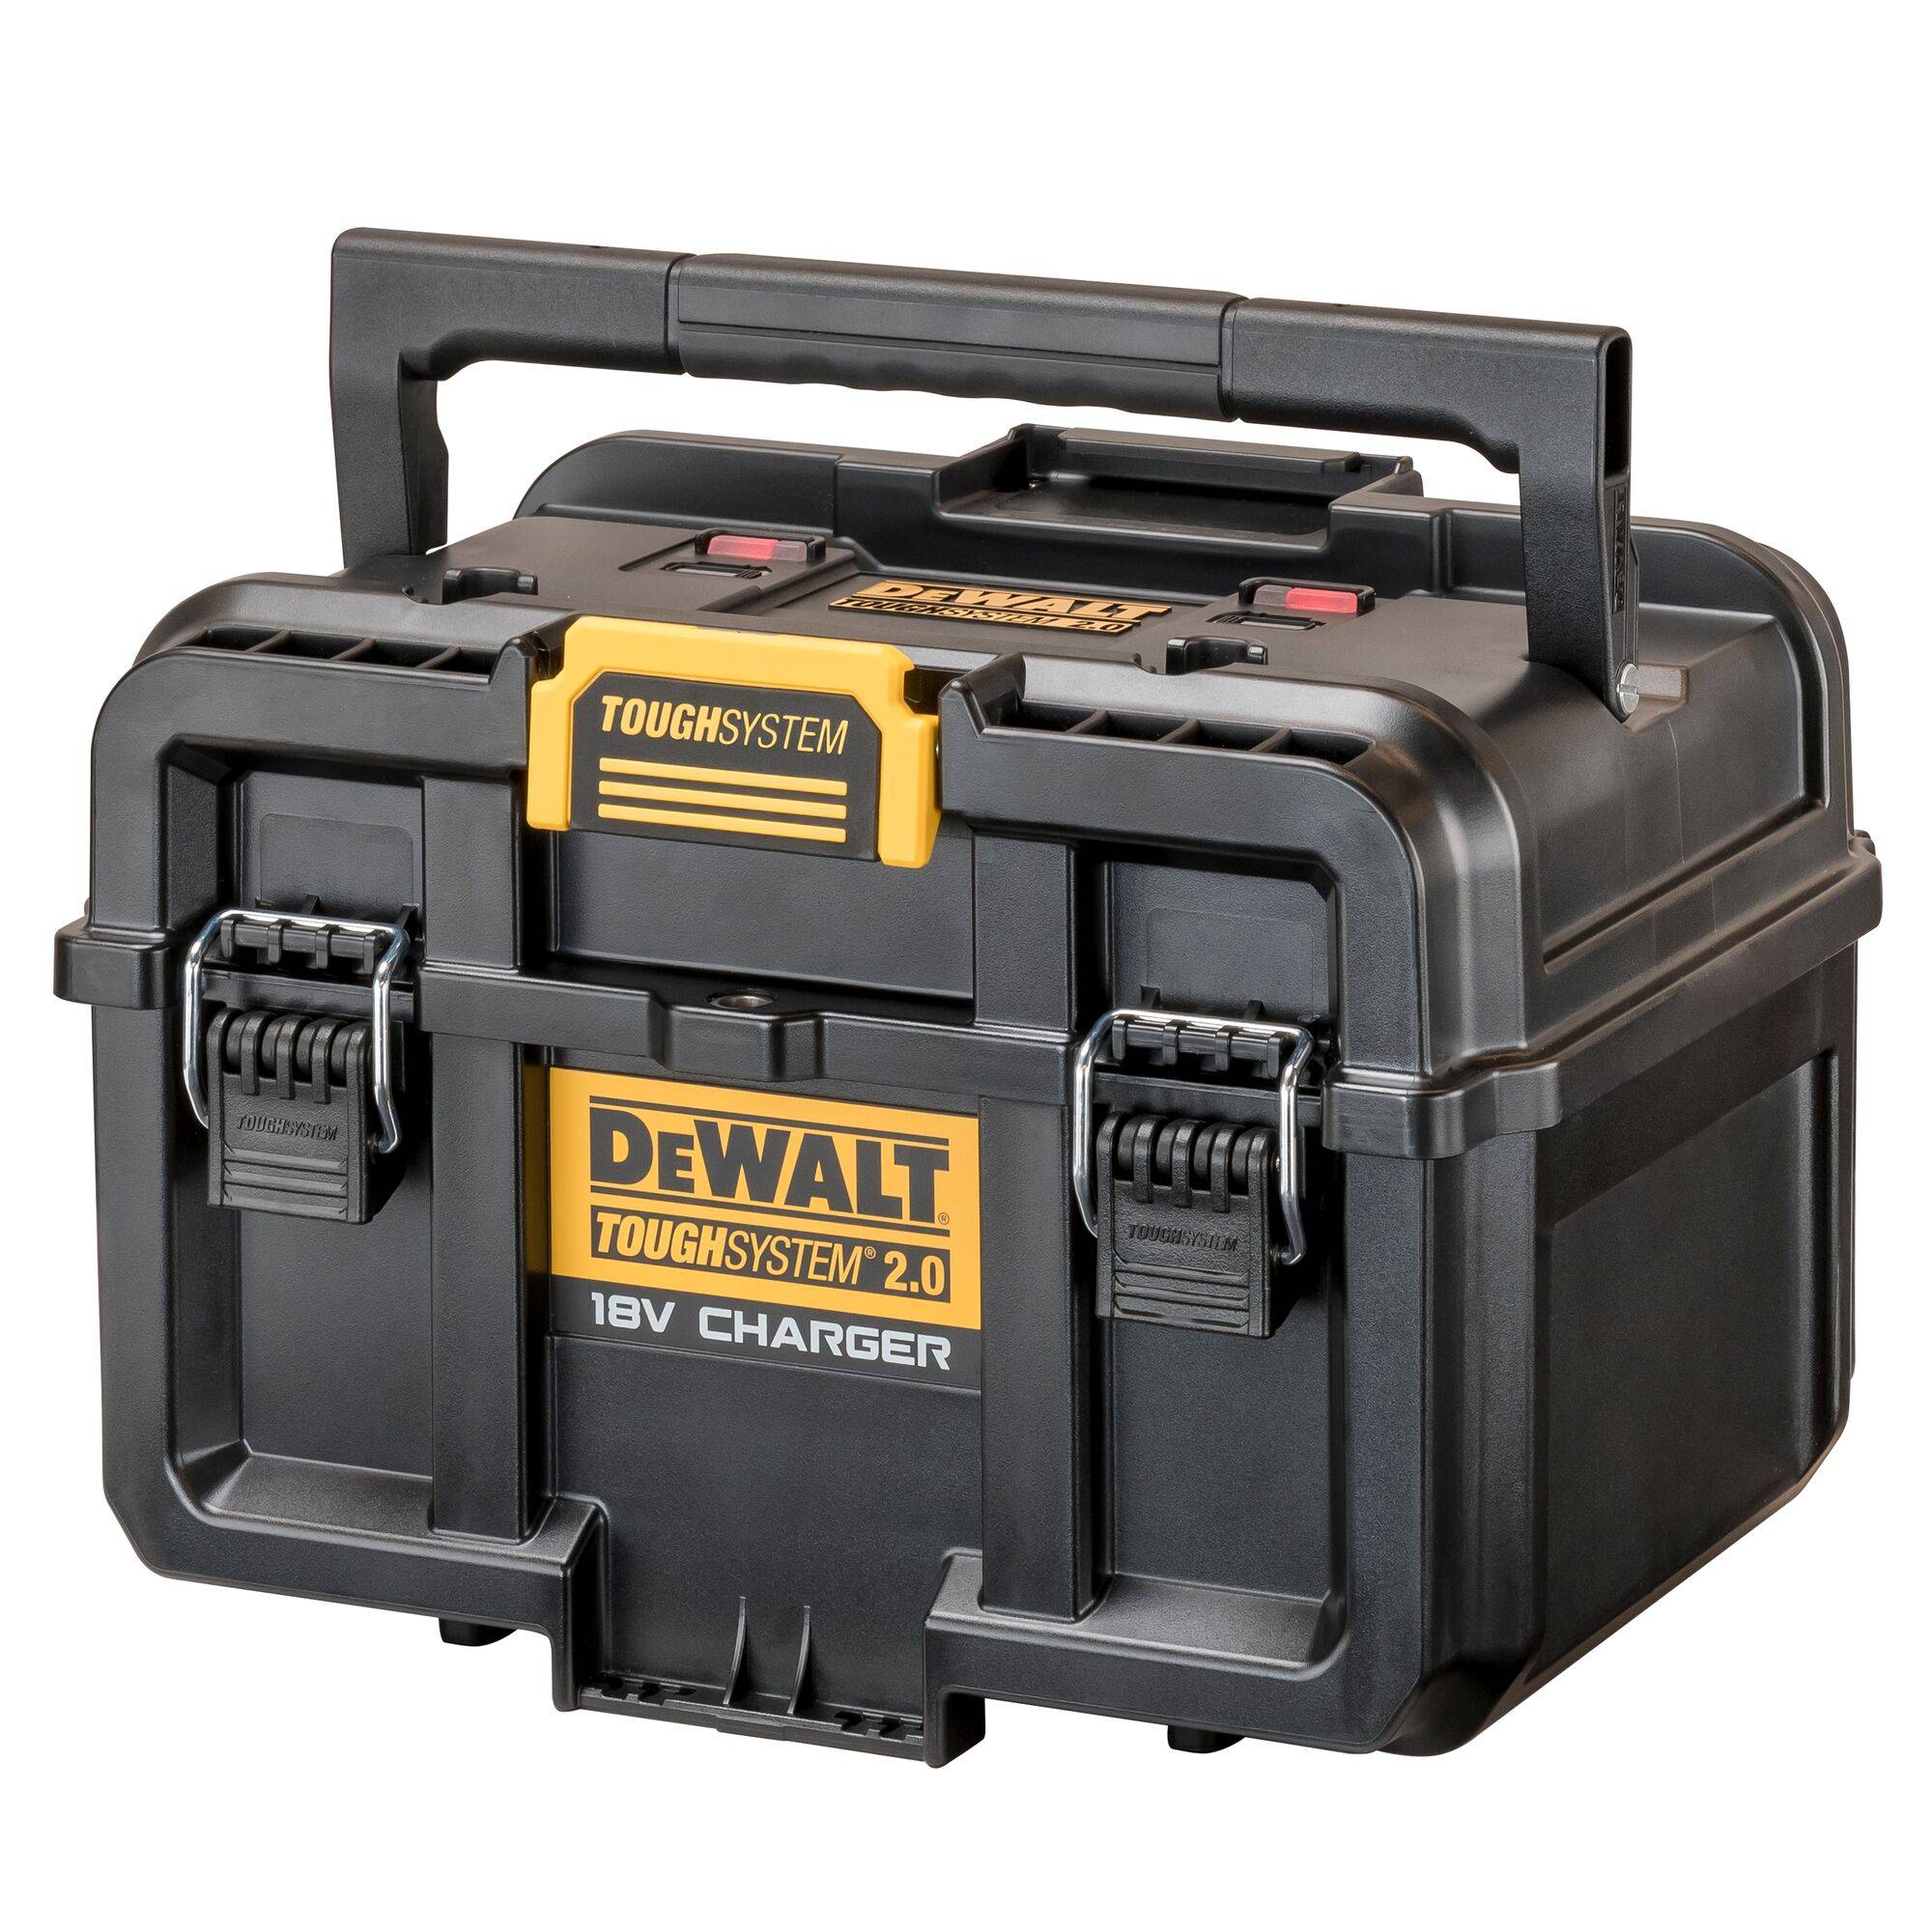 Dewalt DEWALT Battery pack charger DWST83471-QW Conrad.com